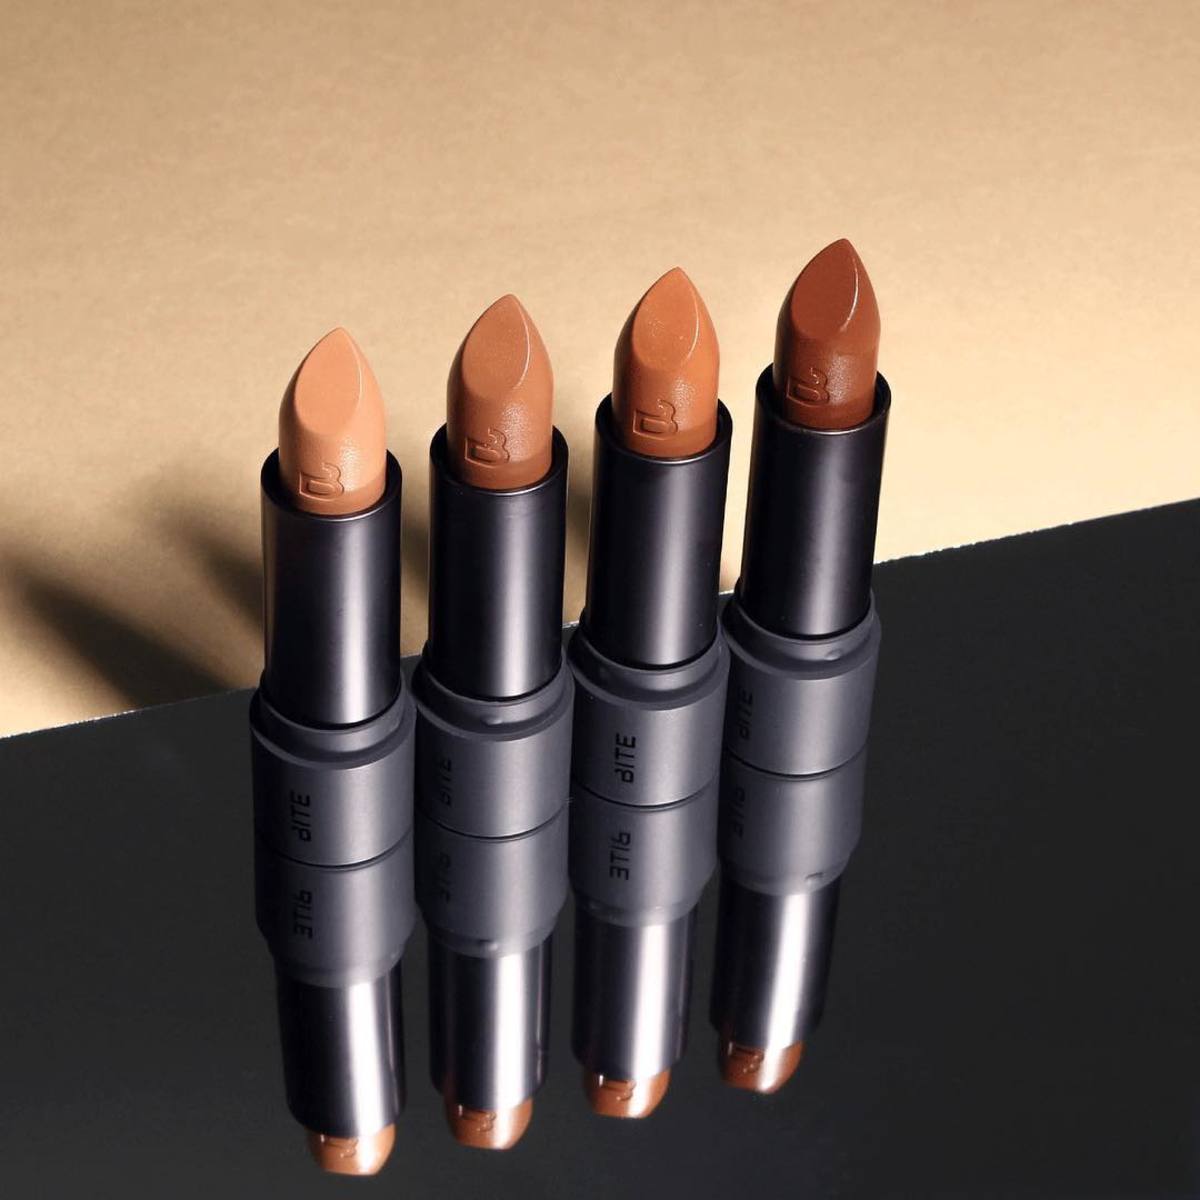 Bite Beauty's nude lipsticks. Photo: @bitebeauty/Instagram